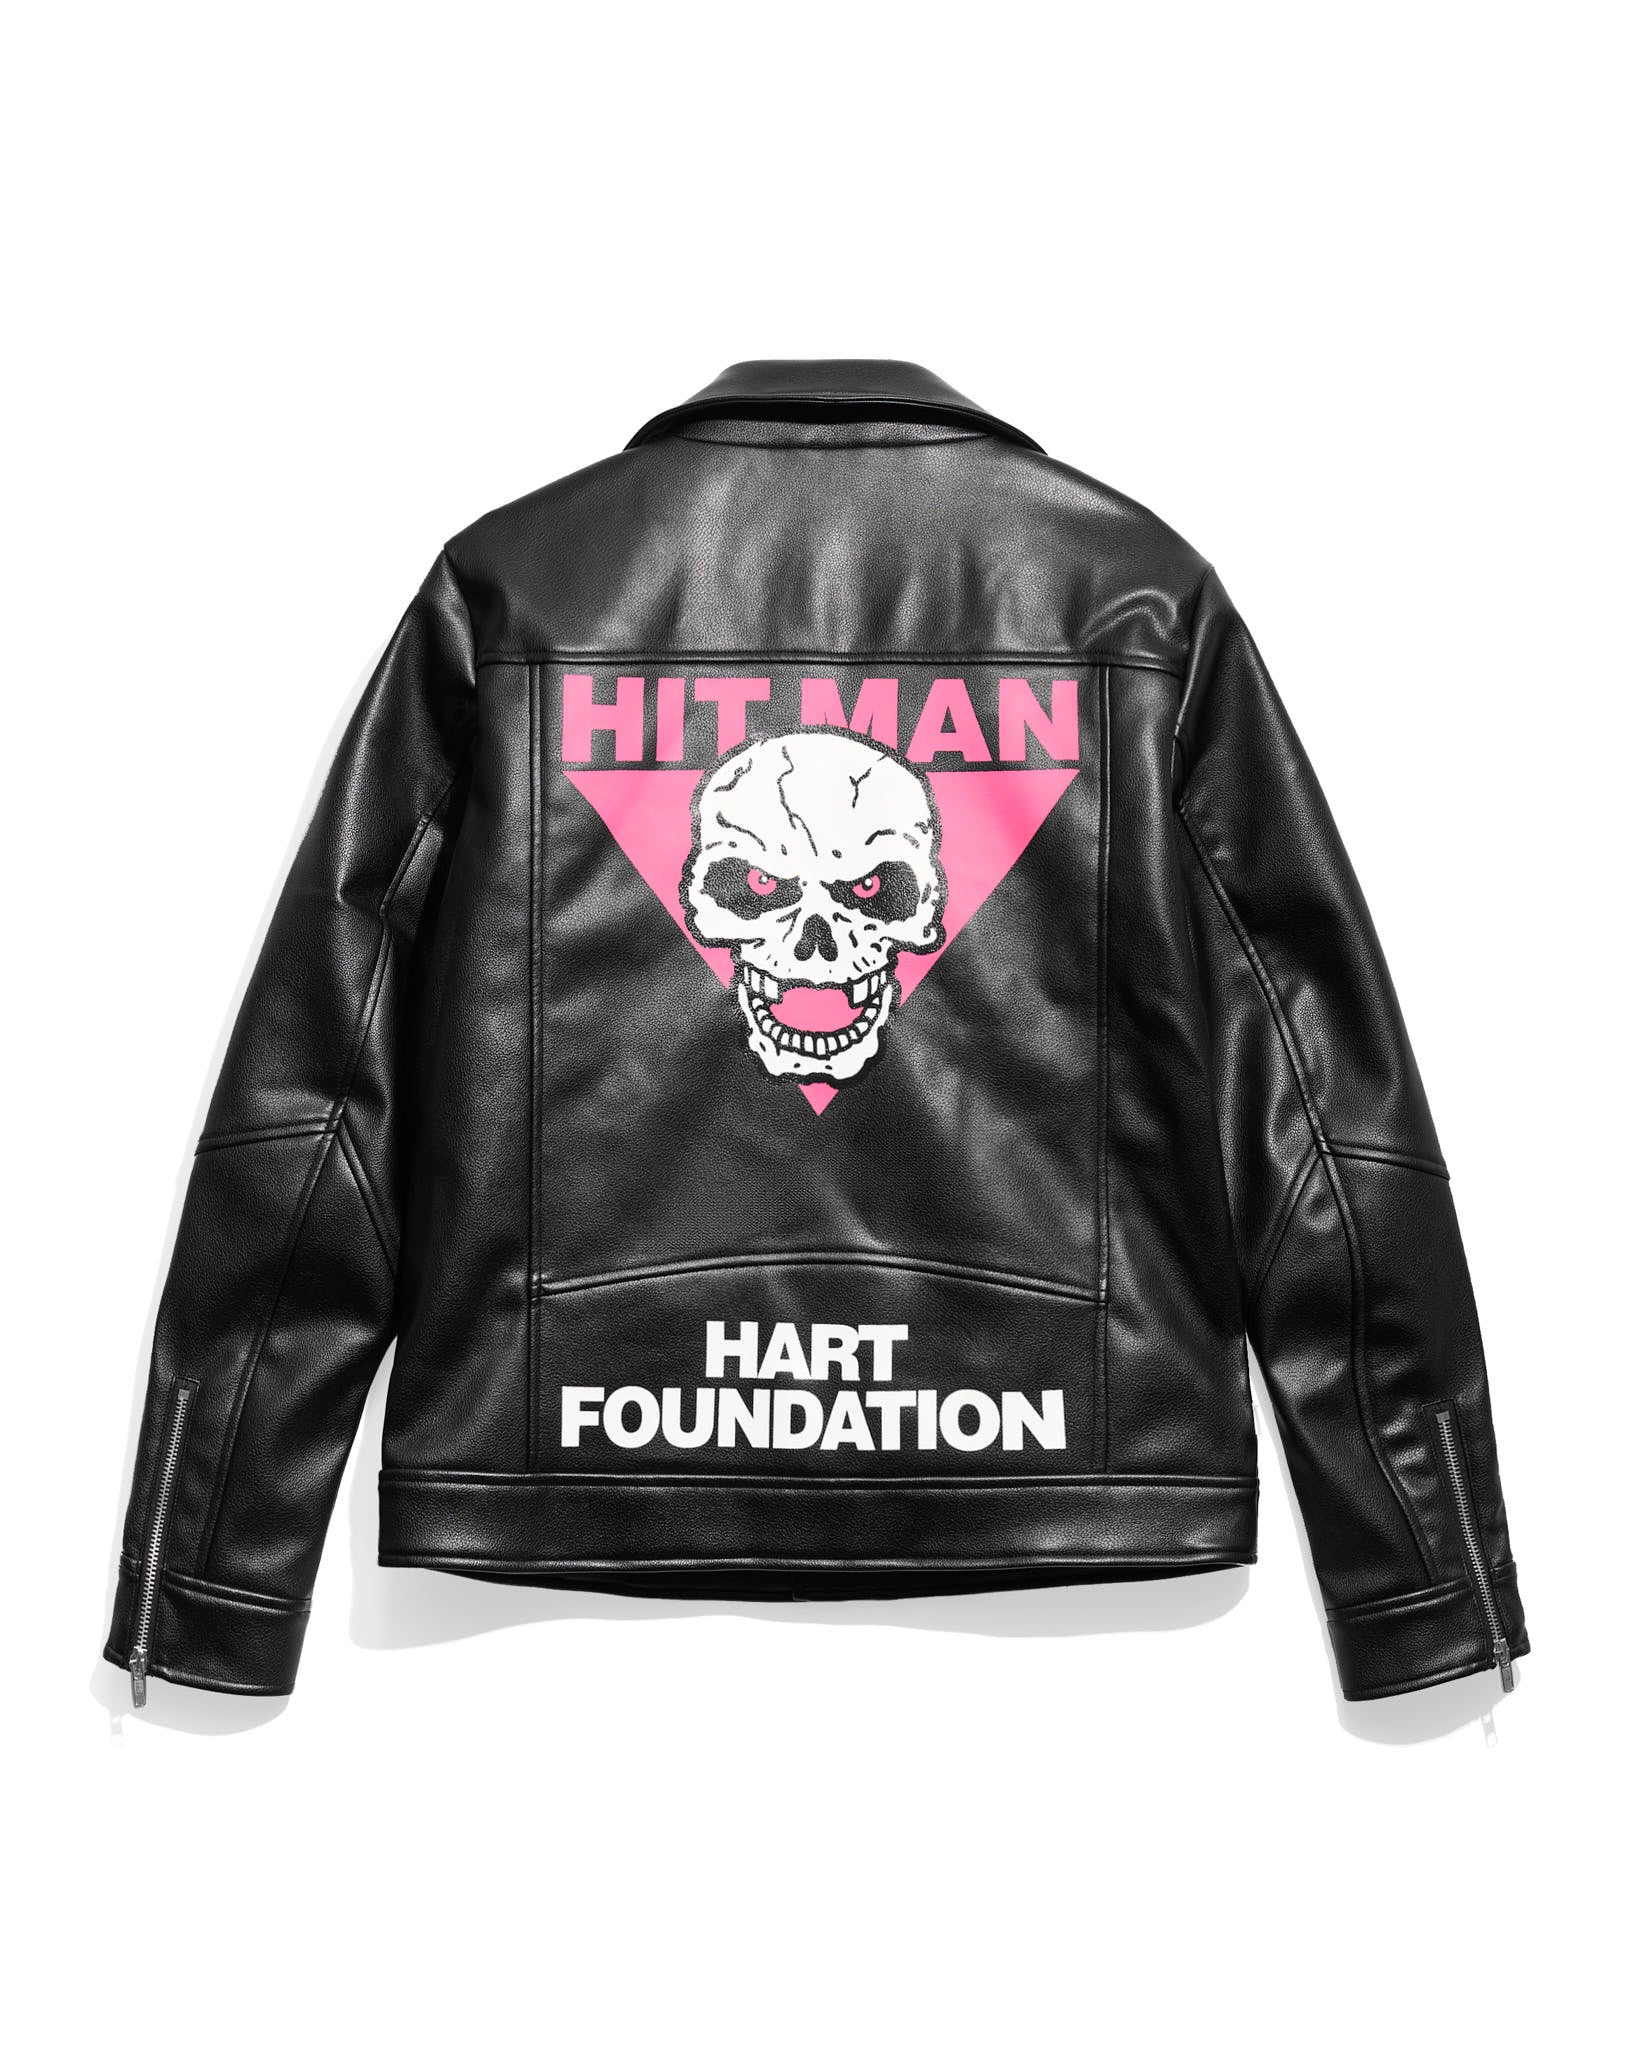 Bret Hart Hitman Hart Foundation 1997 Biker Jacket